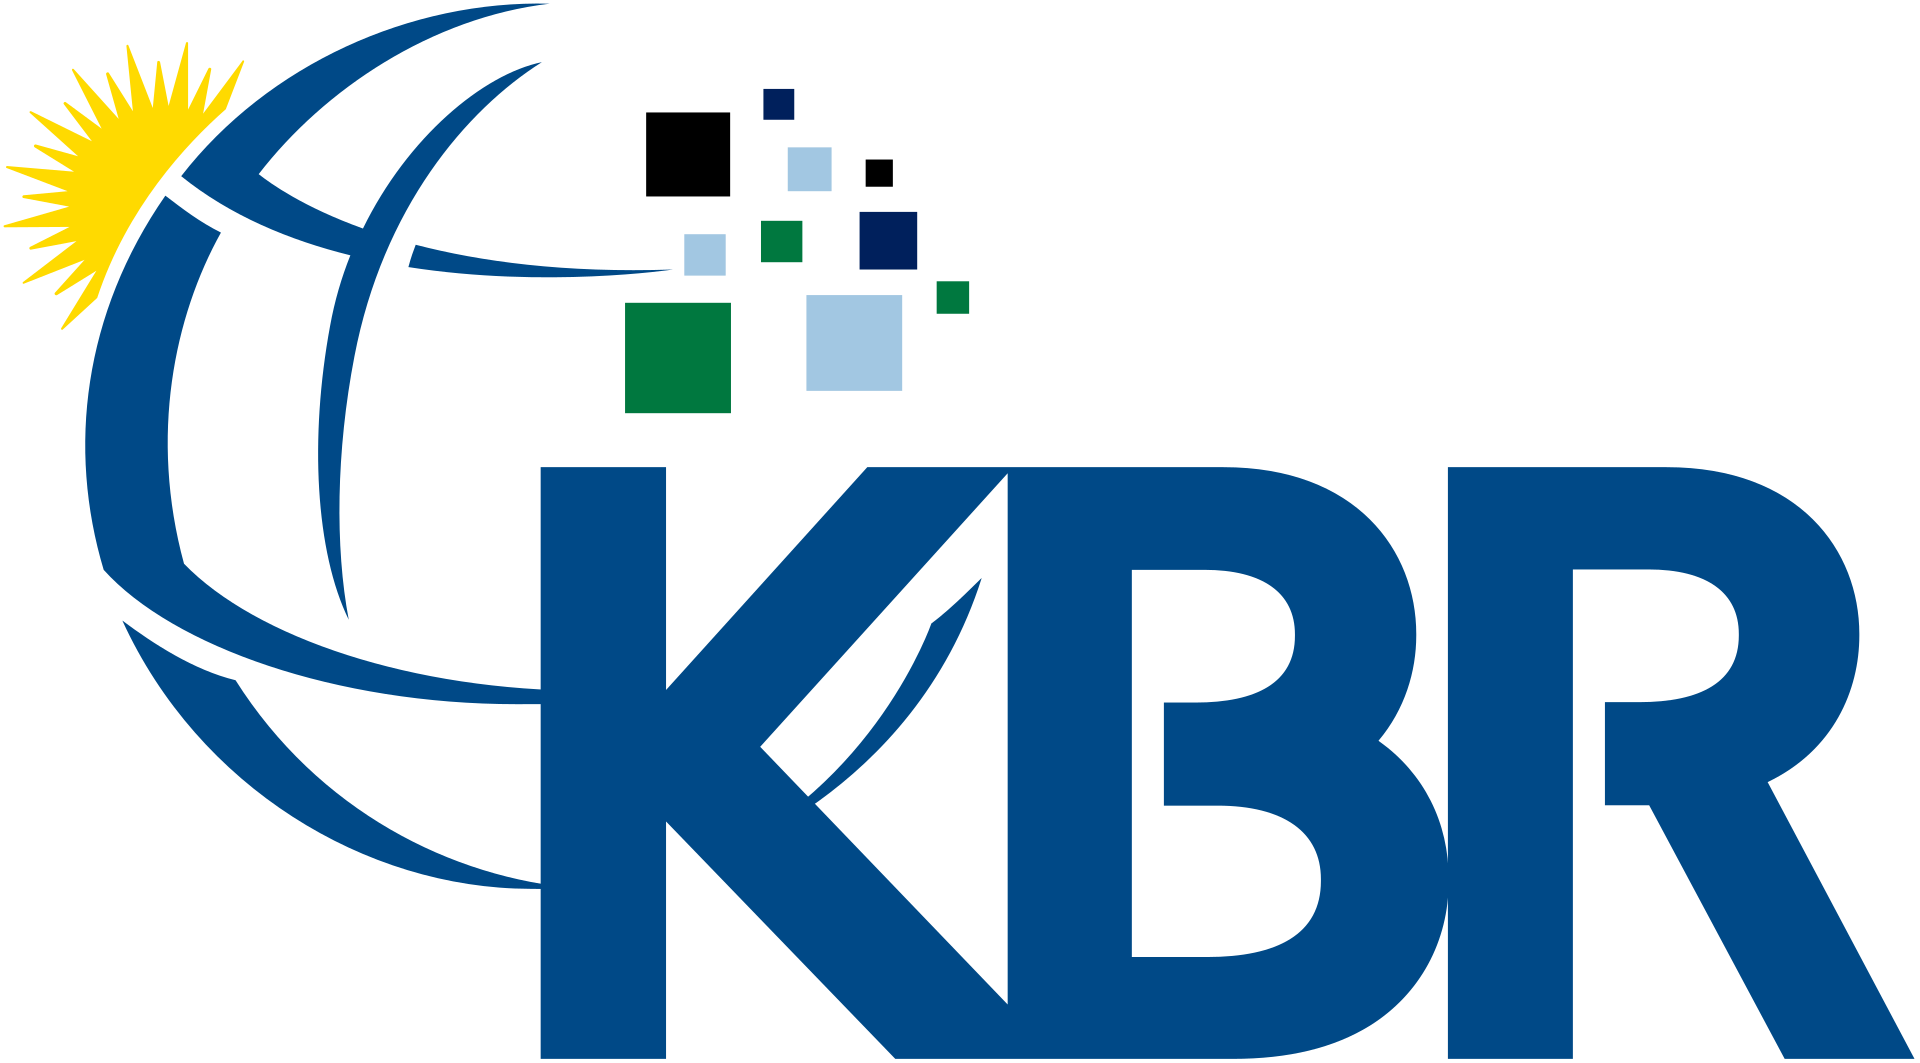 KBR公司. logo, By Source (WP:NFCC#4), Fair use, http://en.维基百科.org/w/index.php?curid = 61420148 "